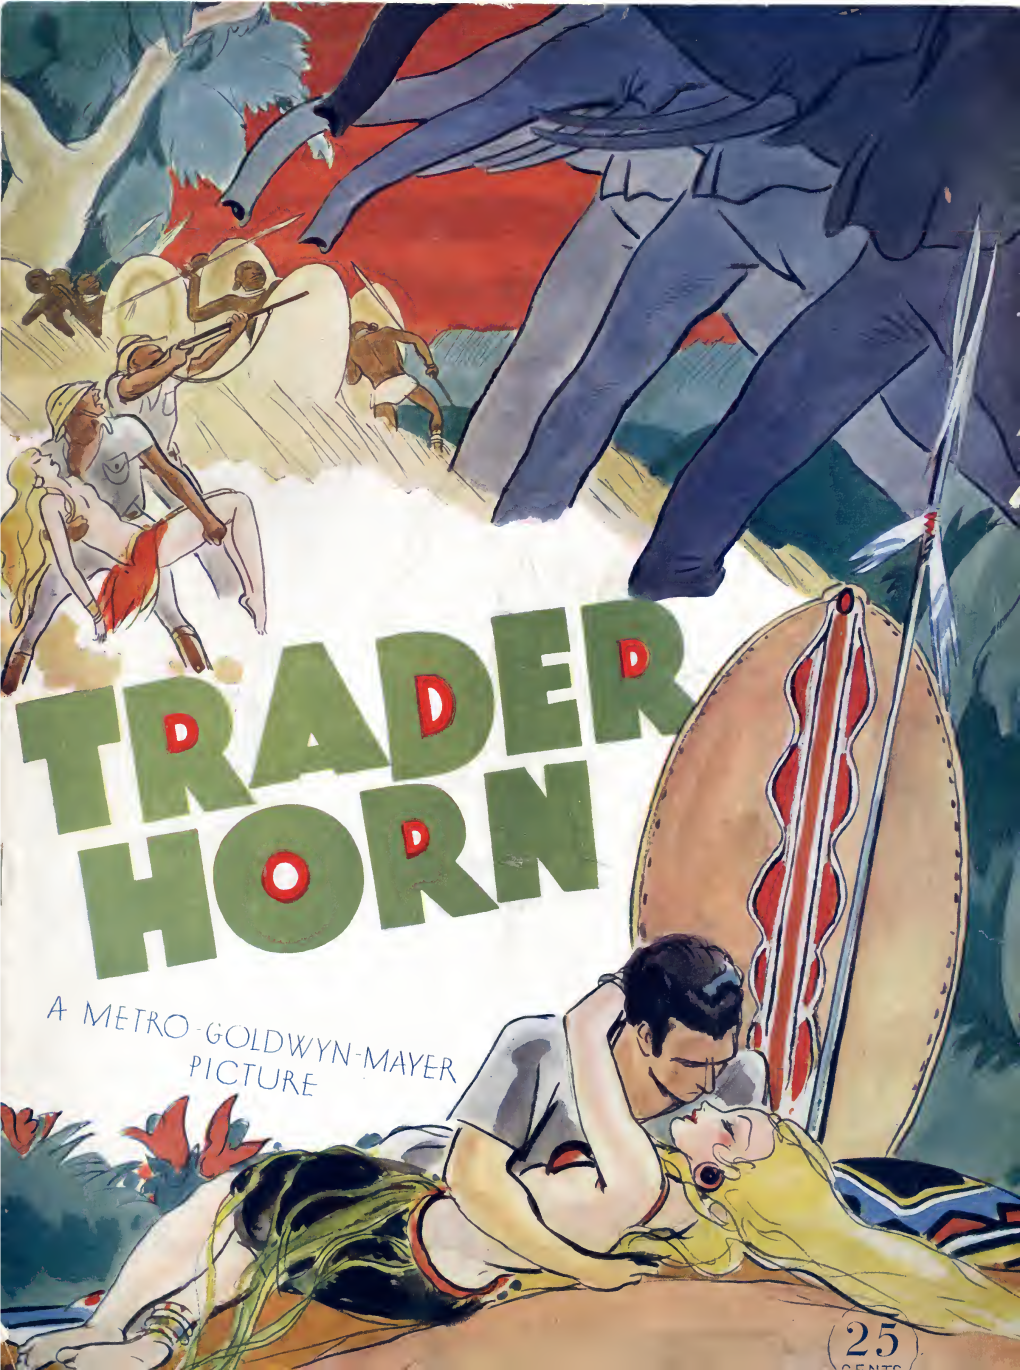 Trader Horn (1931) Souvenir Program